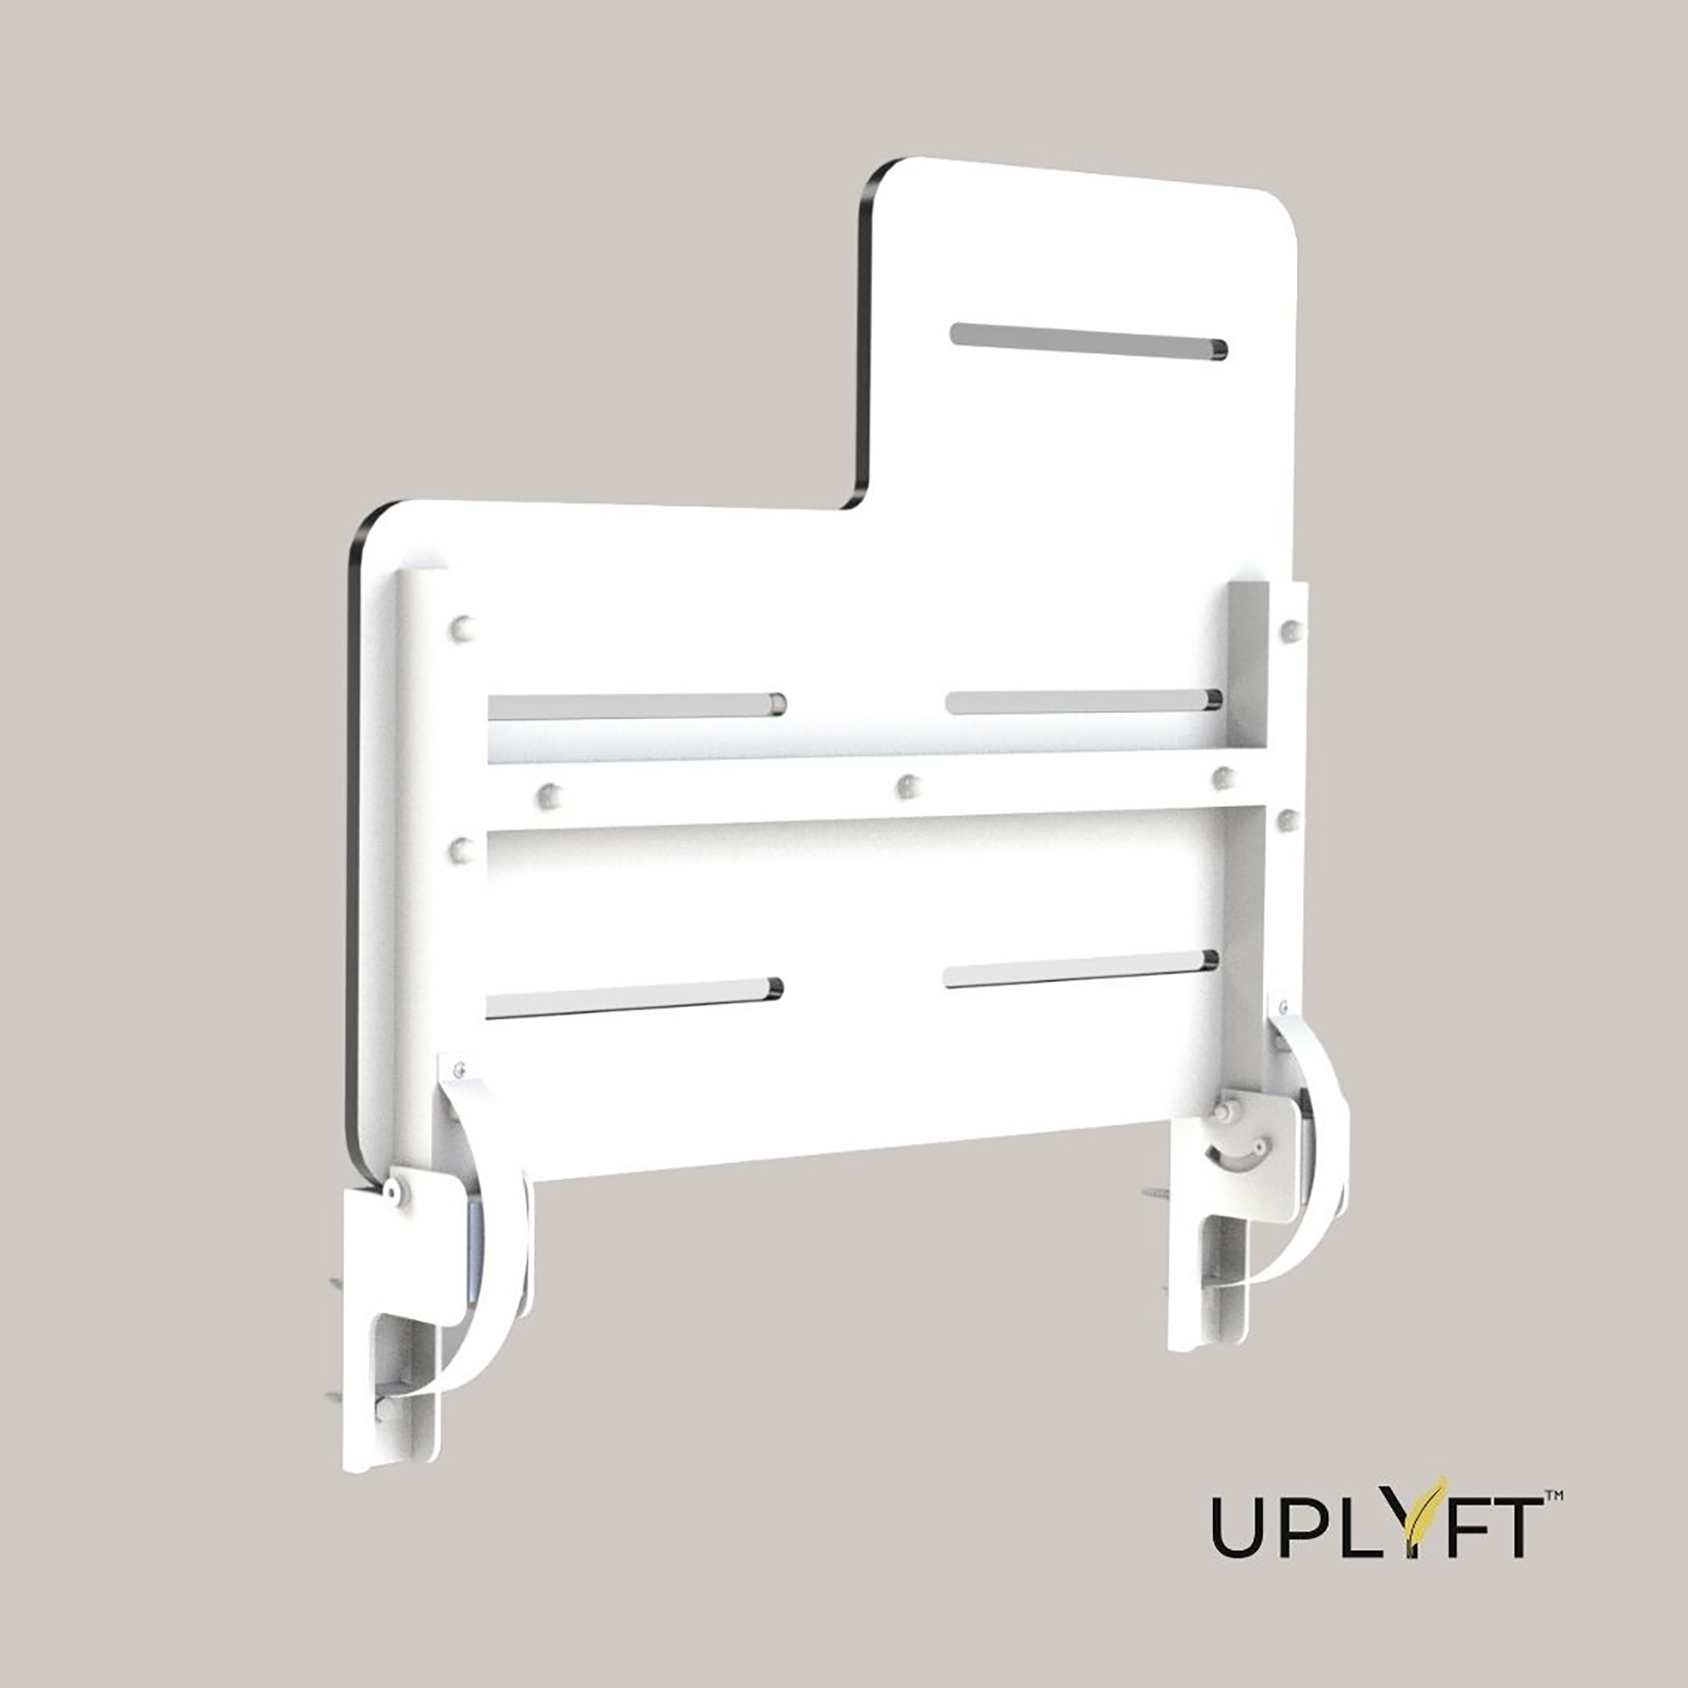 Uplyft L-Shaped Wall Mount Bathware | Seat CSI Shower